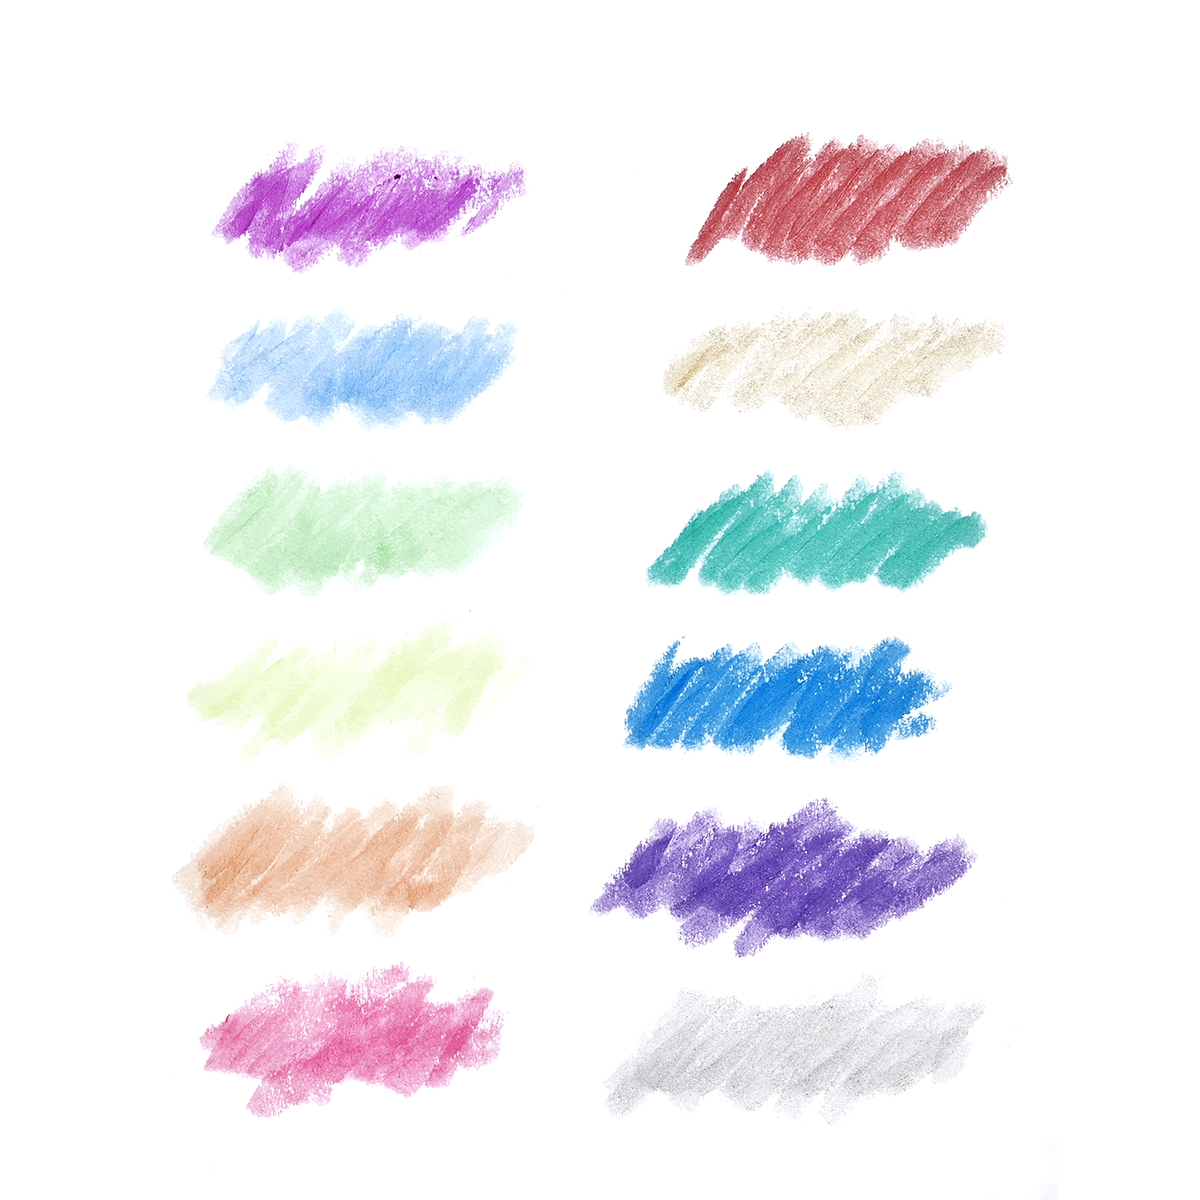 Ooly Chunkies Paint Sticks -Variety Pack, Set of 24